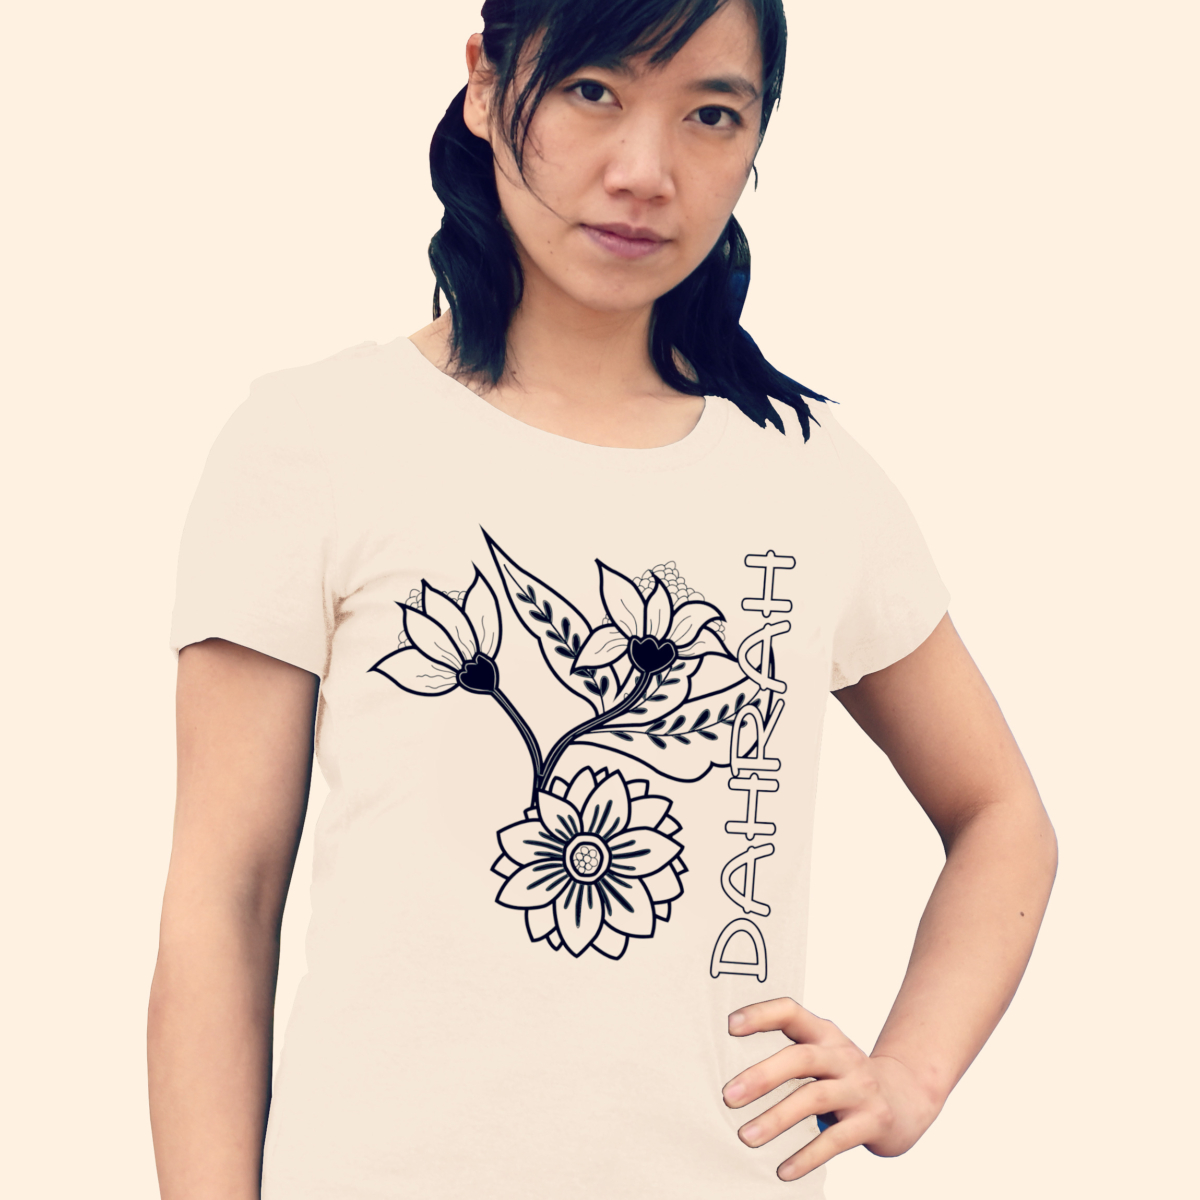 Organic cotton T-shirt with print of beautiful flowers by Dahrah Darah.